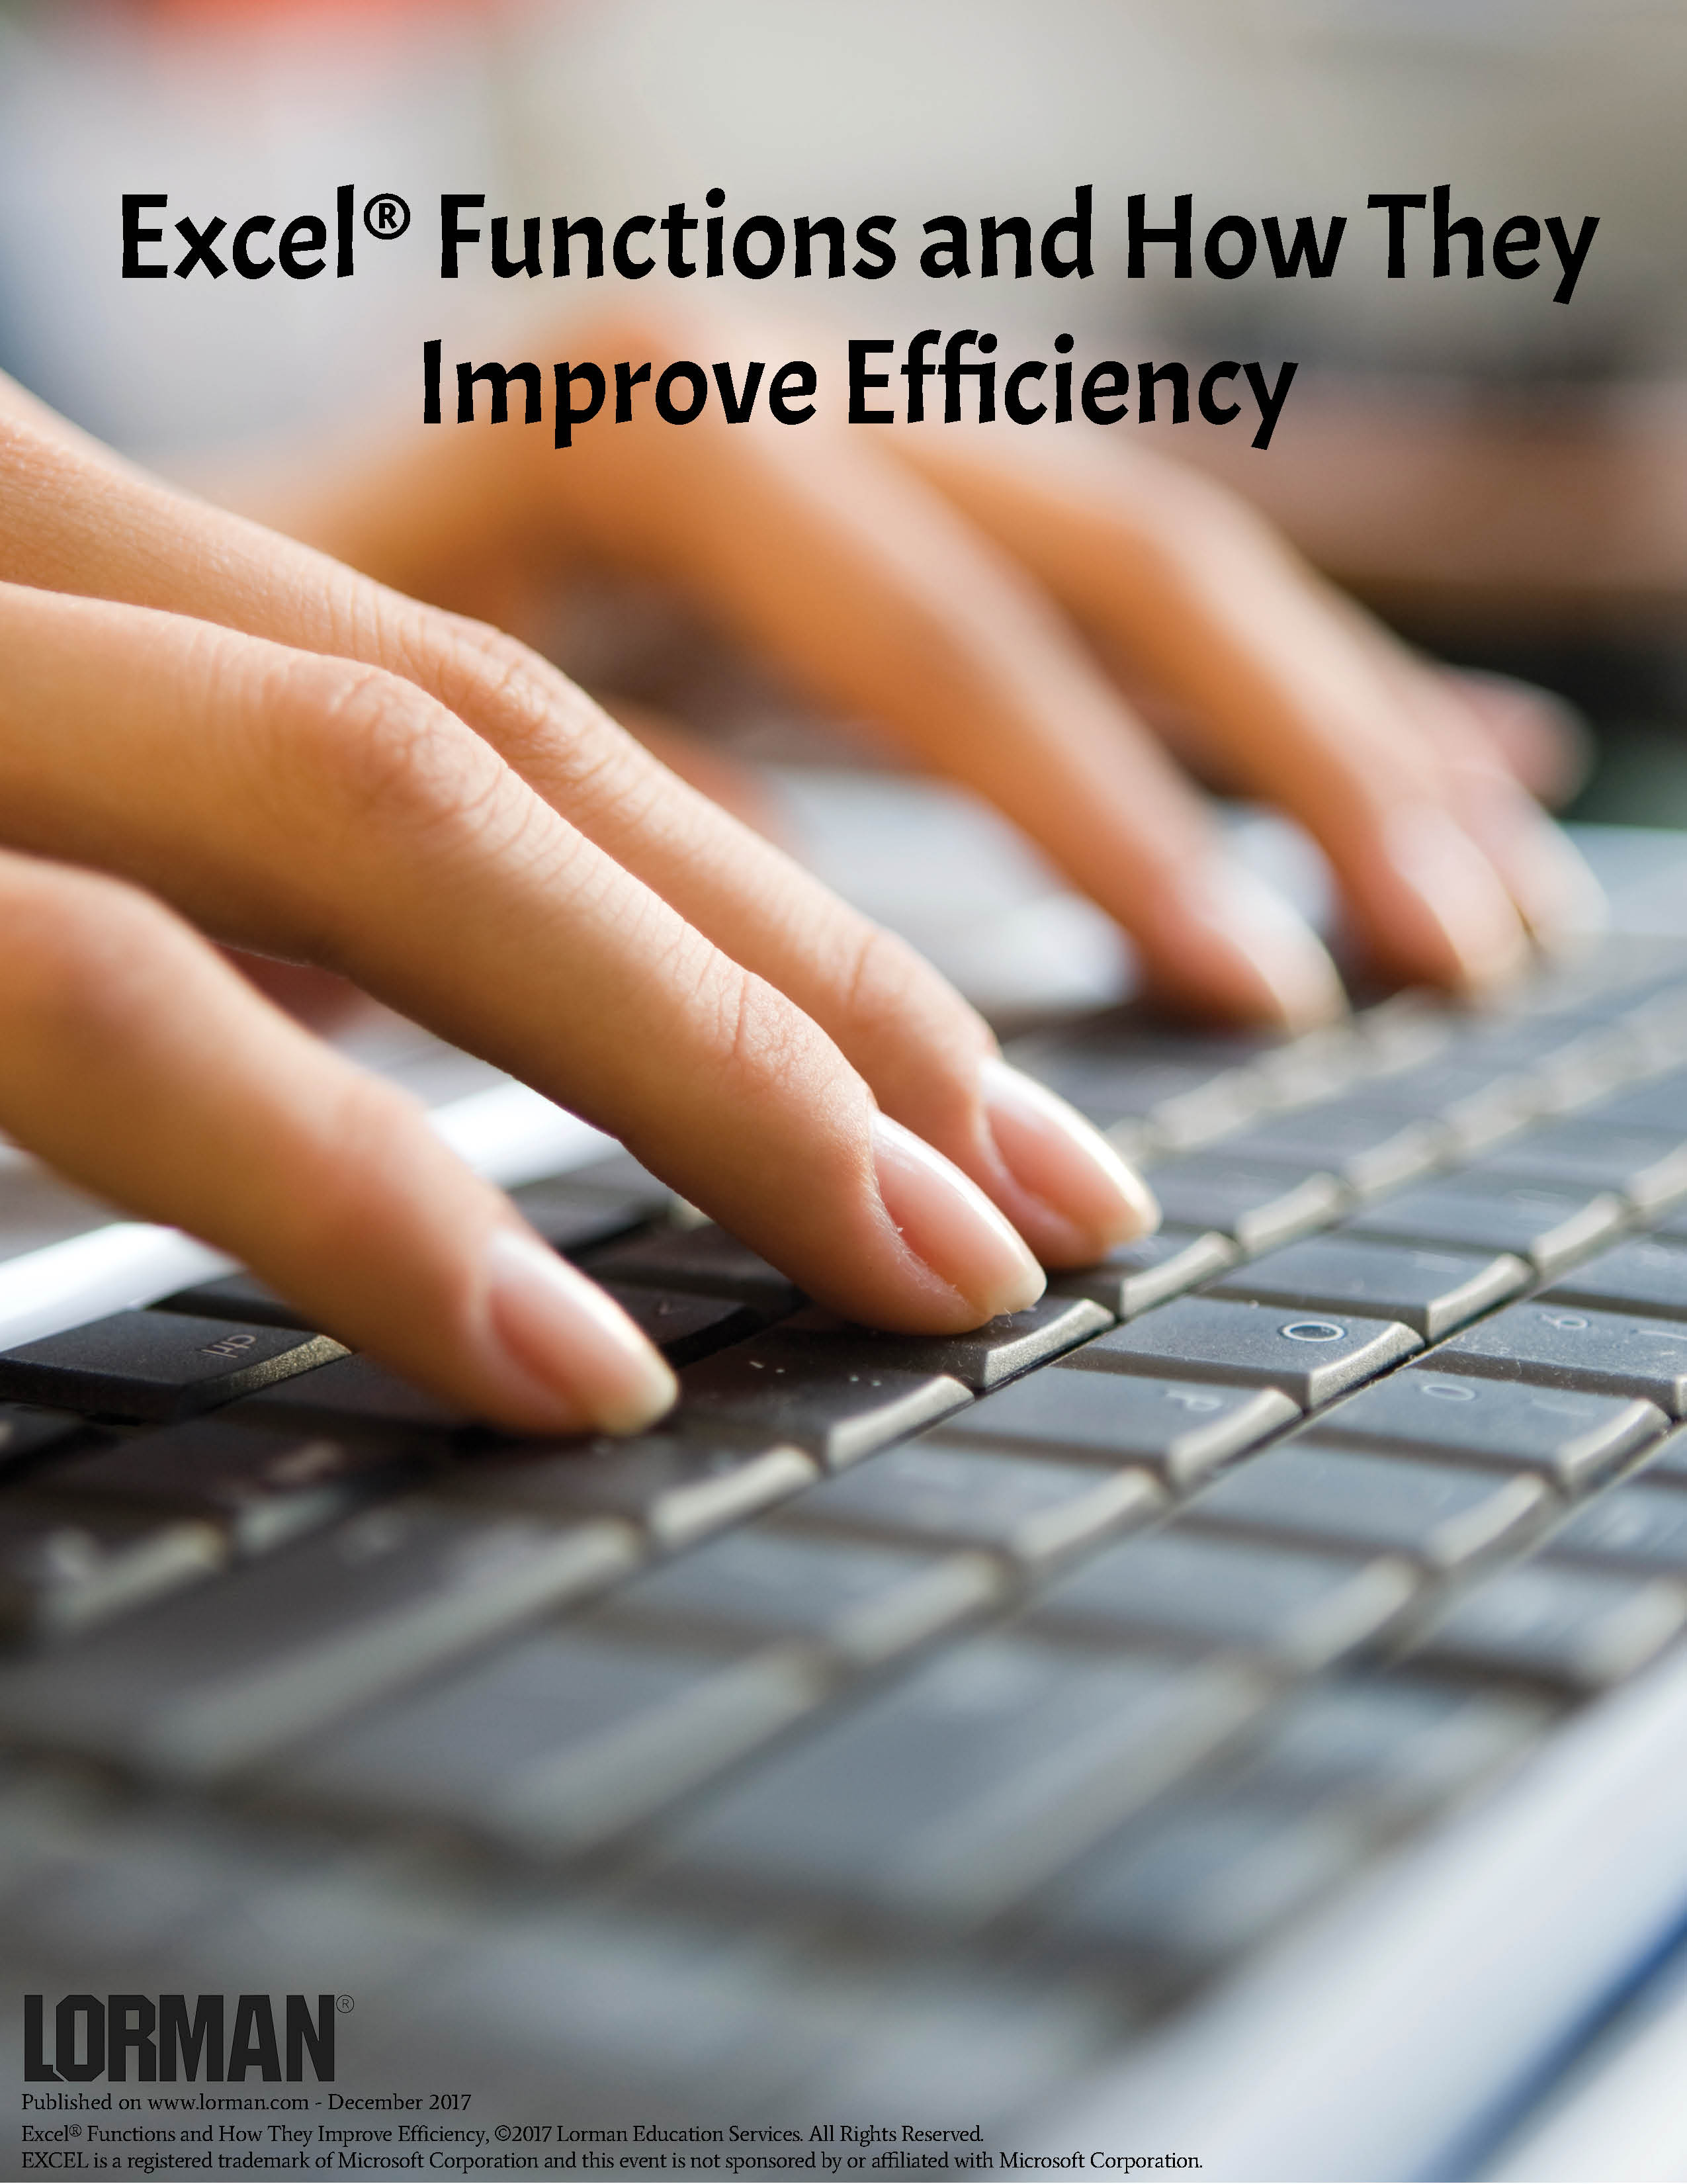 How Excel® Functions Improve Efficiency